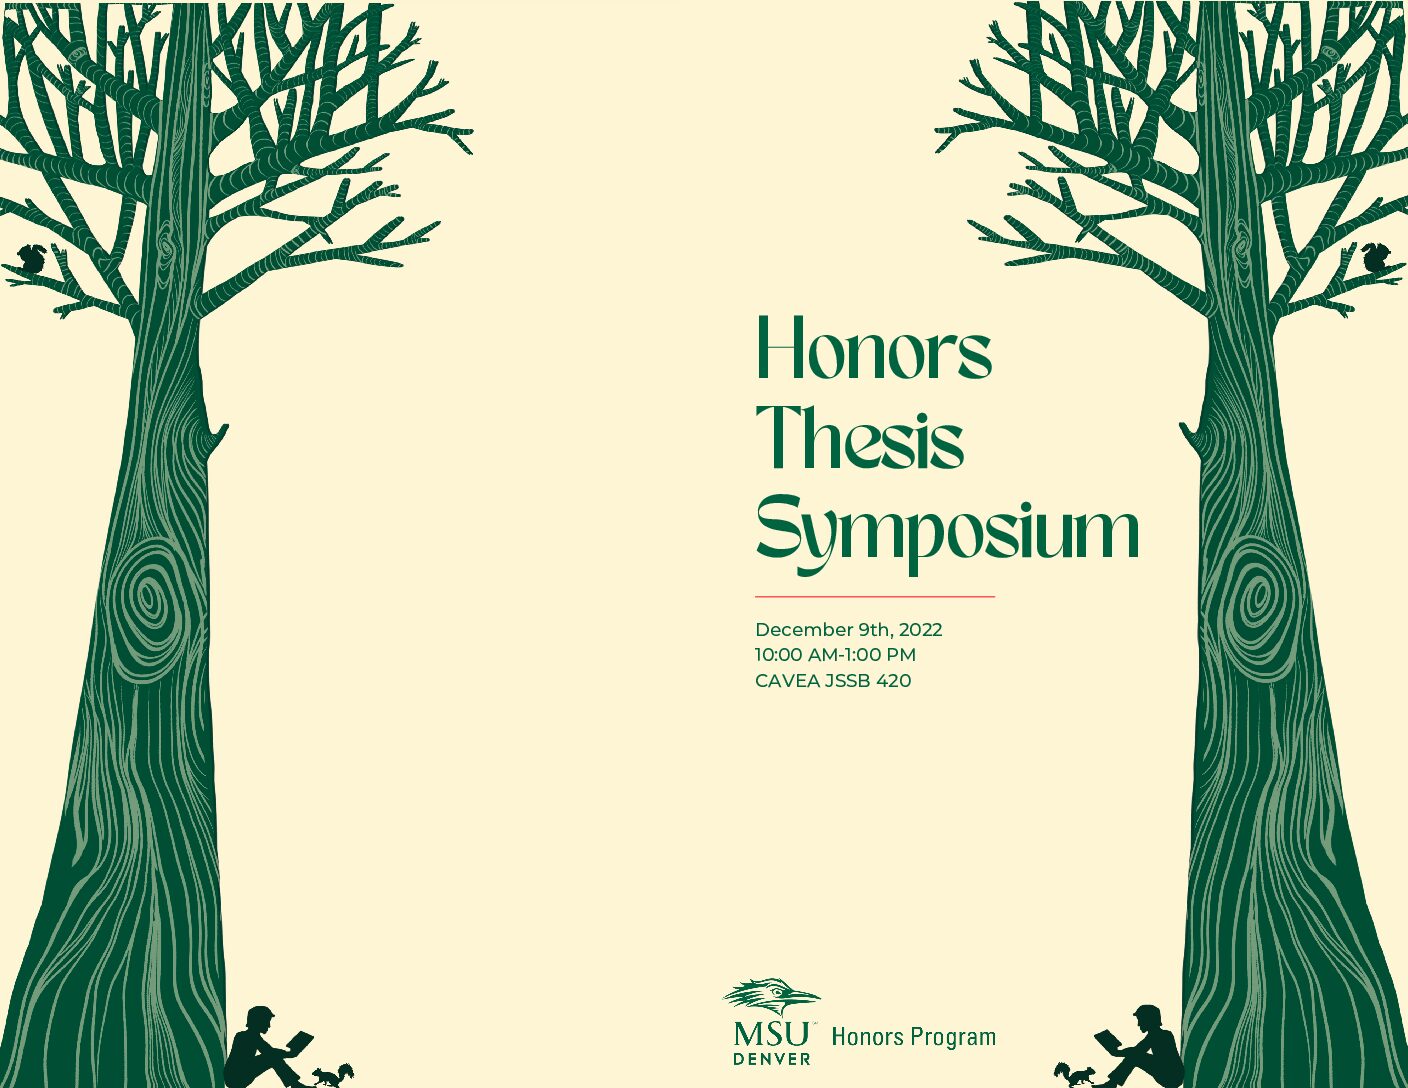 NEW Honors Thesis Symposium Program